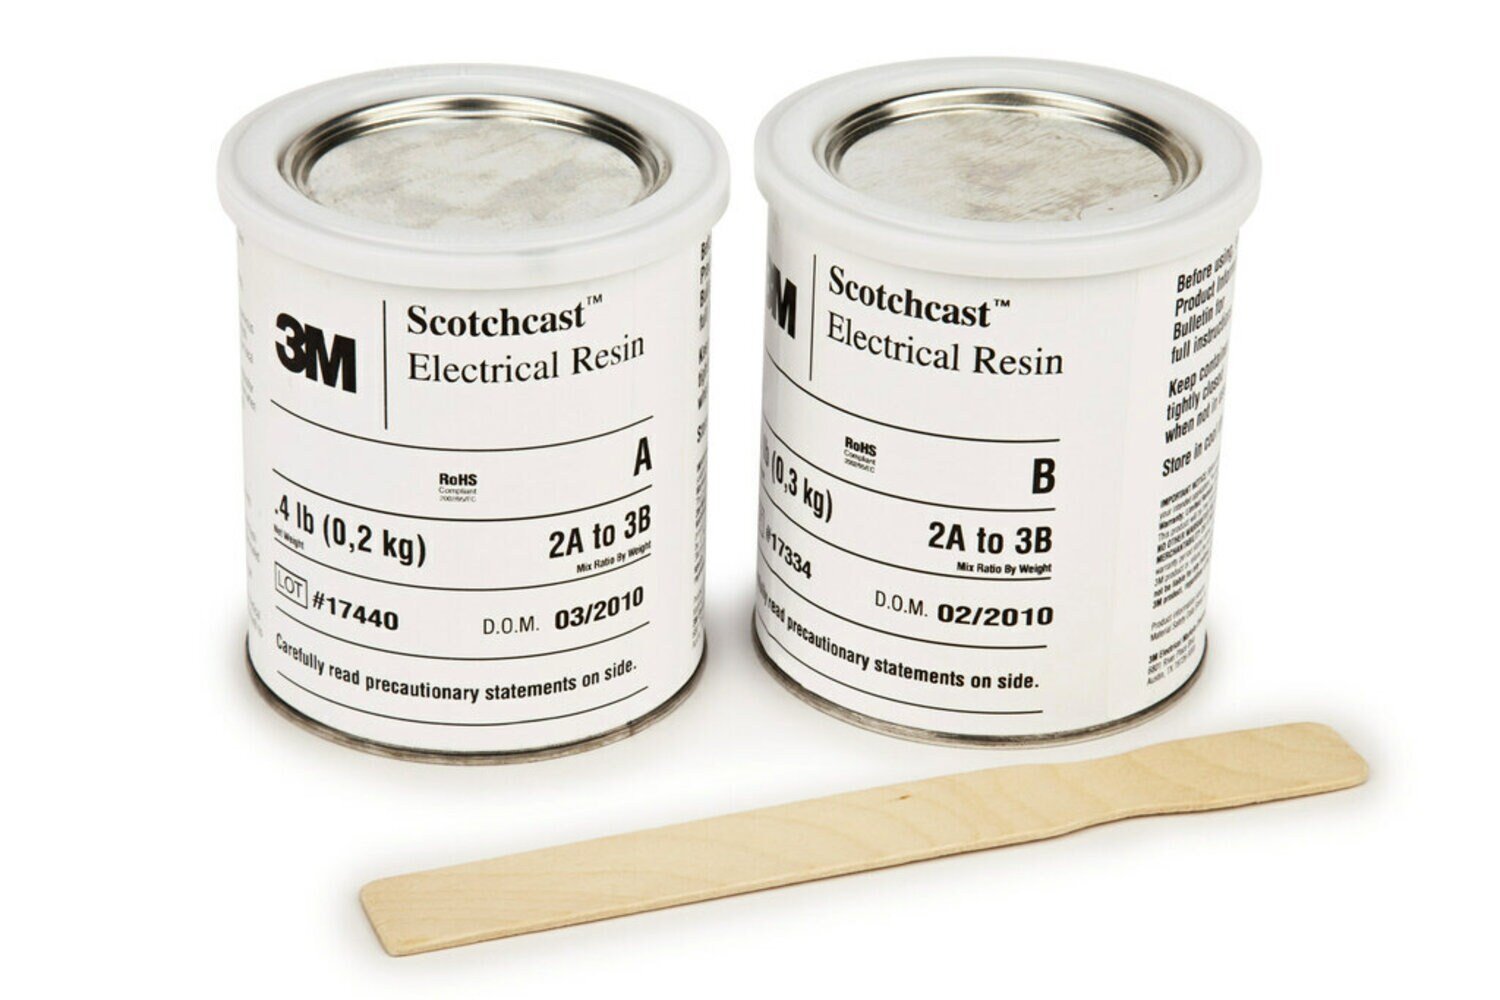 7000057516 - 3M Scotchcast Electrical Resin 226 (11 lb), 1 Kit/Case